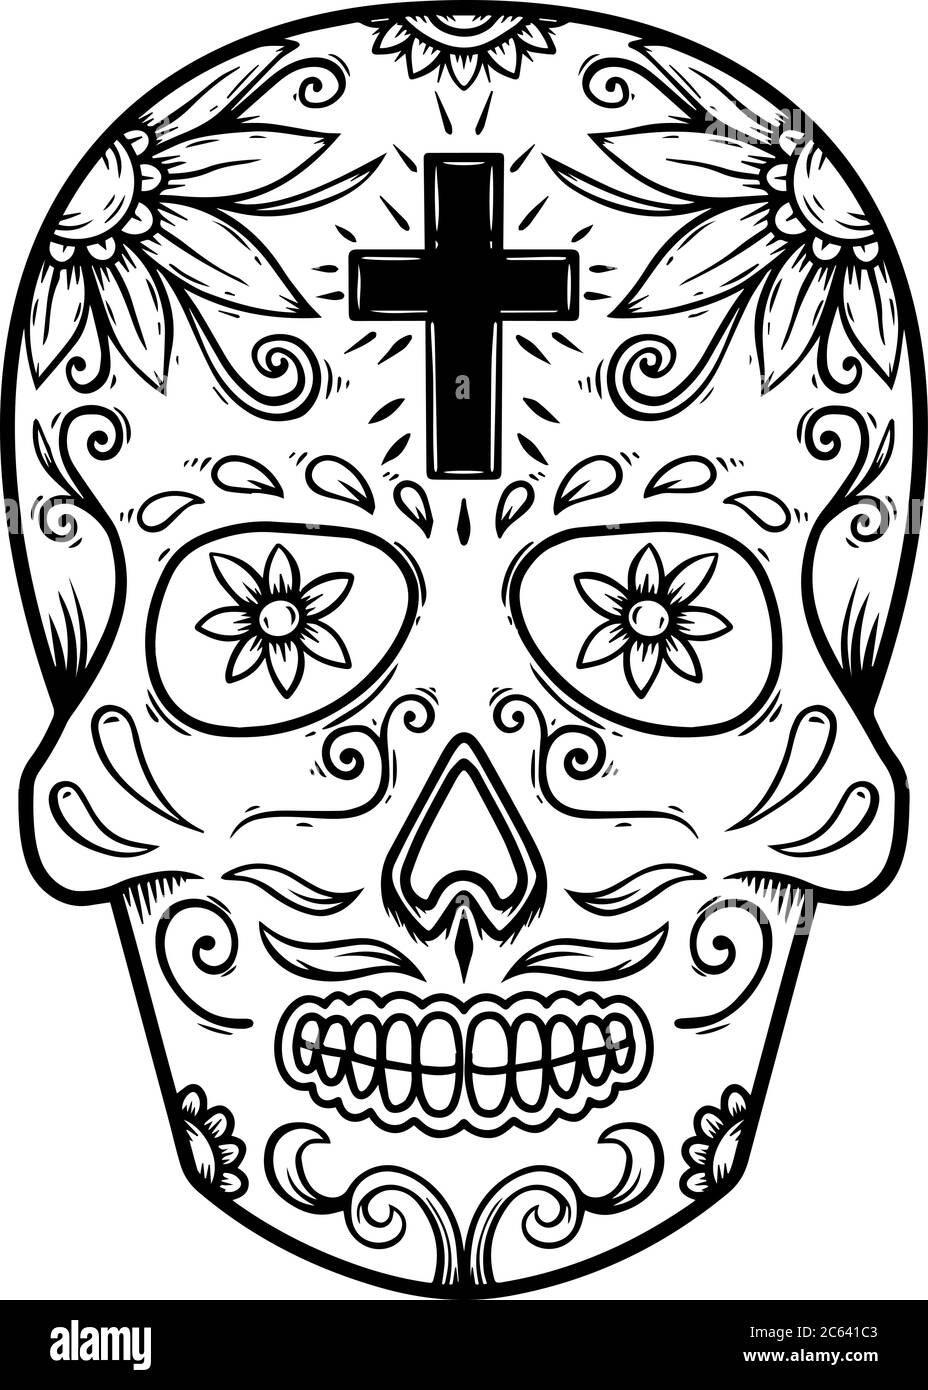 Illustration Of Mexican Sugar Skull. Design Element For Poster 